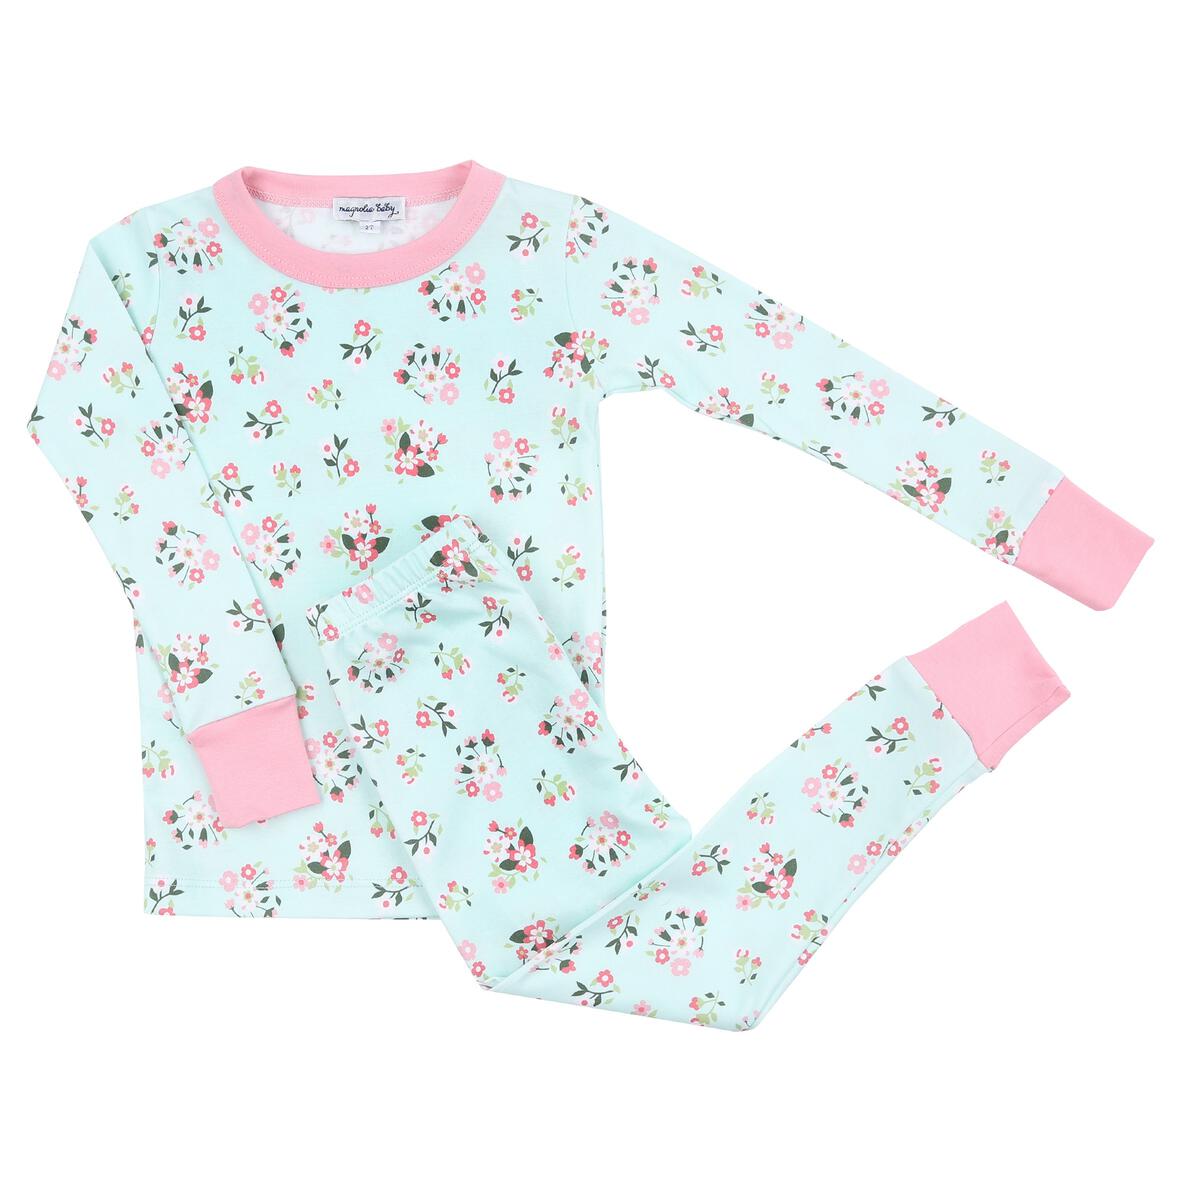 Aurora's Classics Pink Long Pajamas